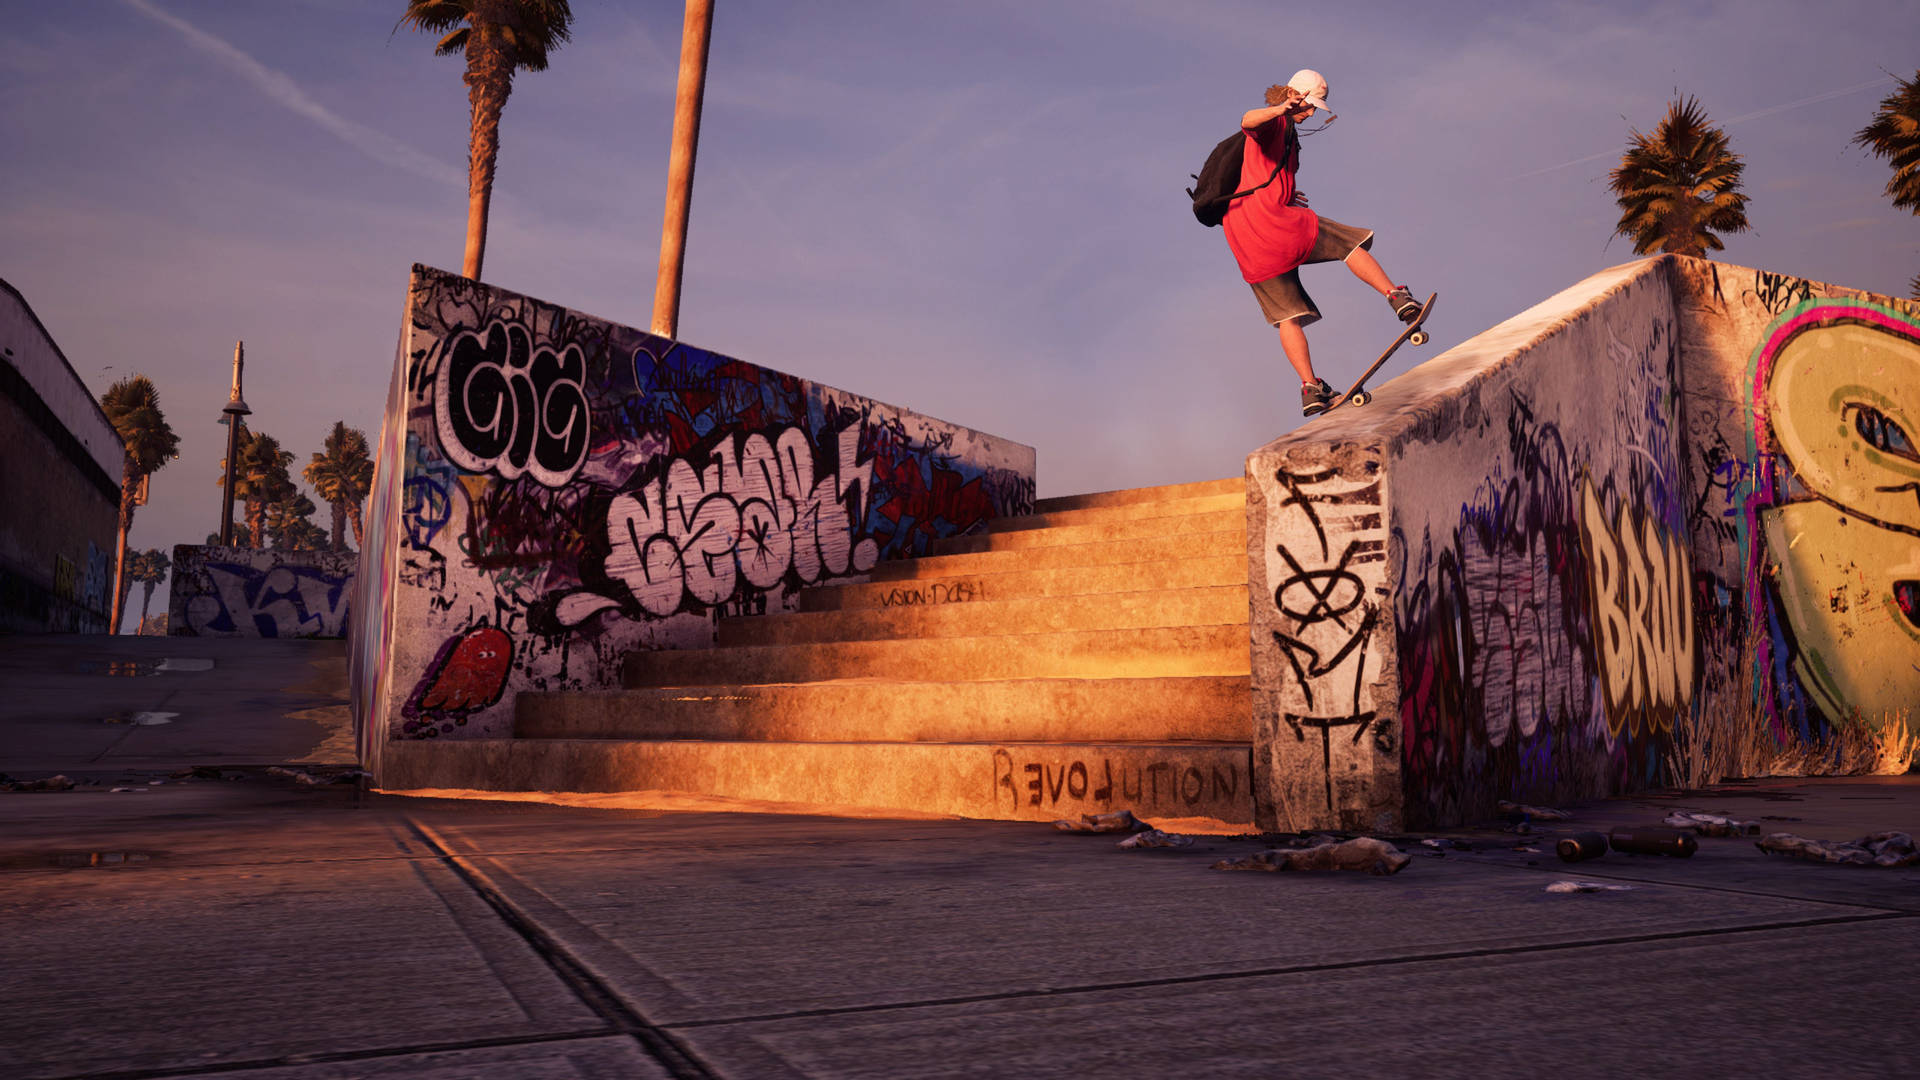 Tony Hawk Skateboarder Graffiti Stairs Background